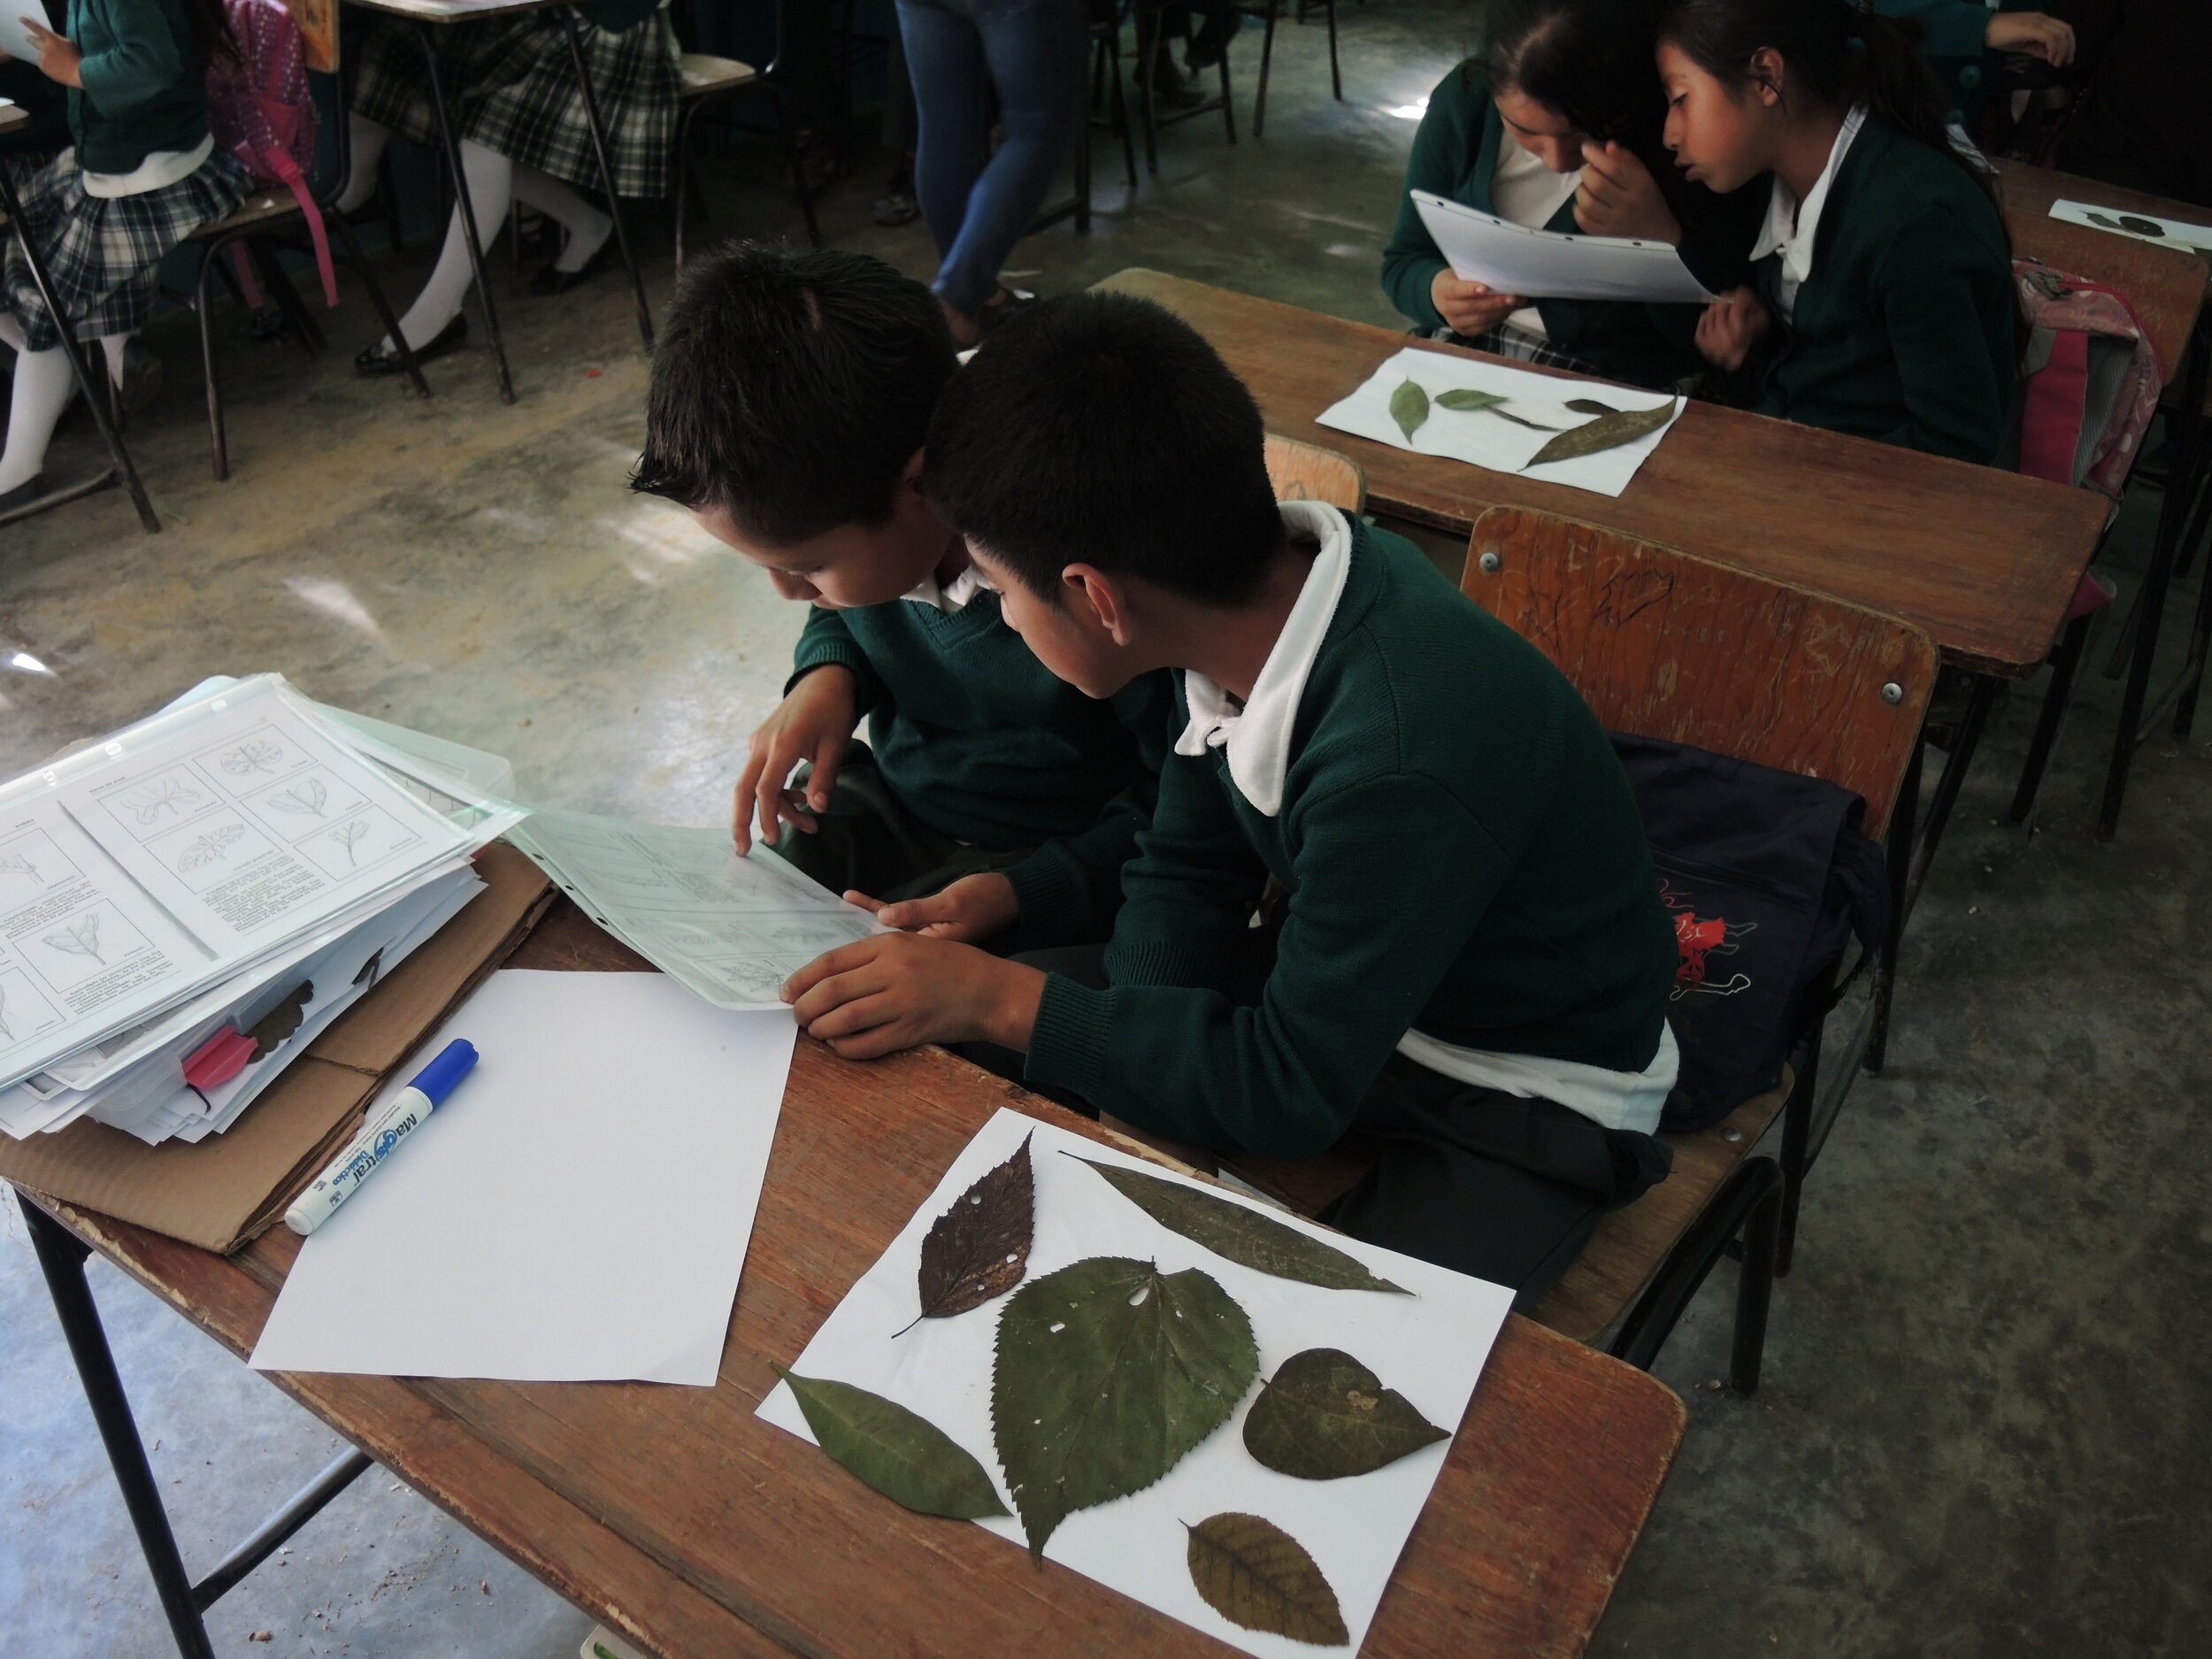 School children examining leaves